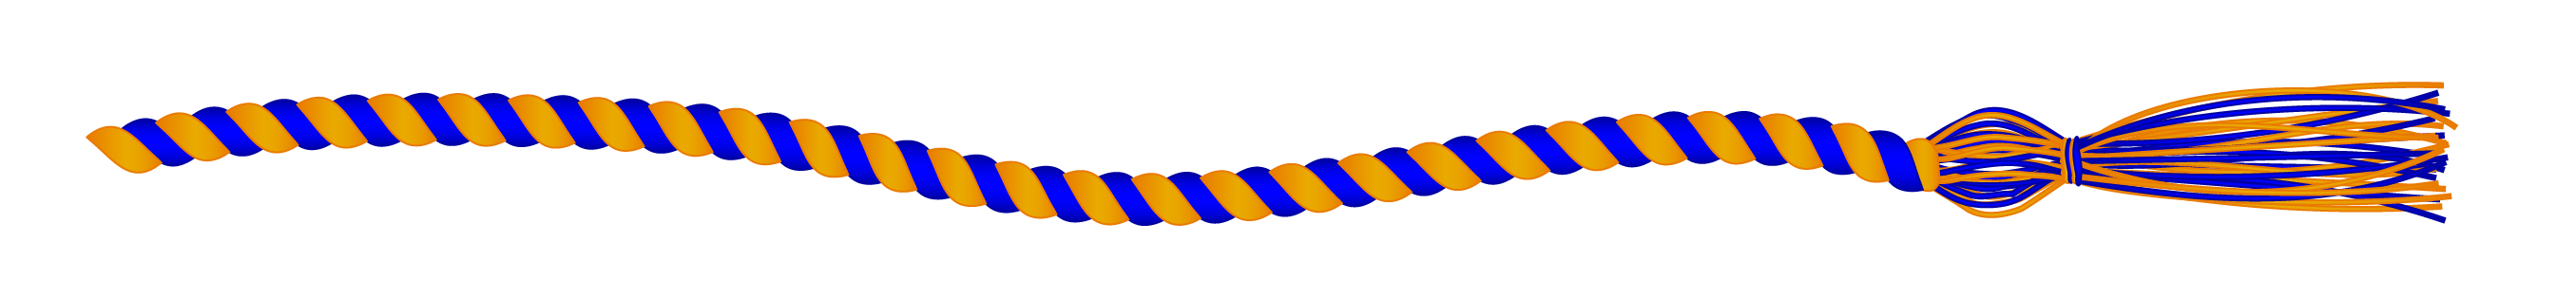 Blue and Orange cord